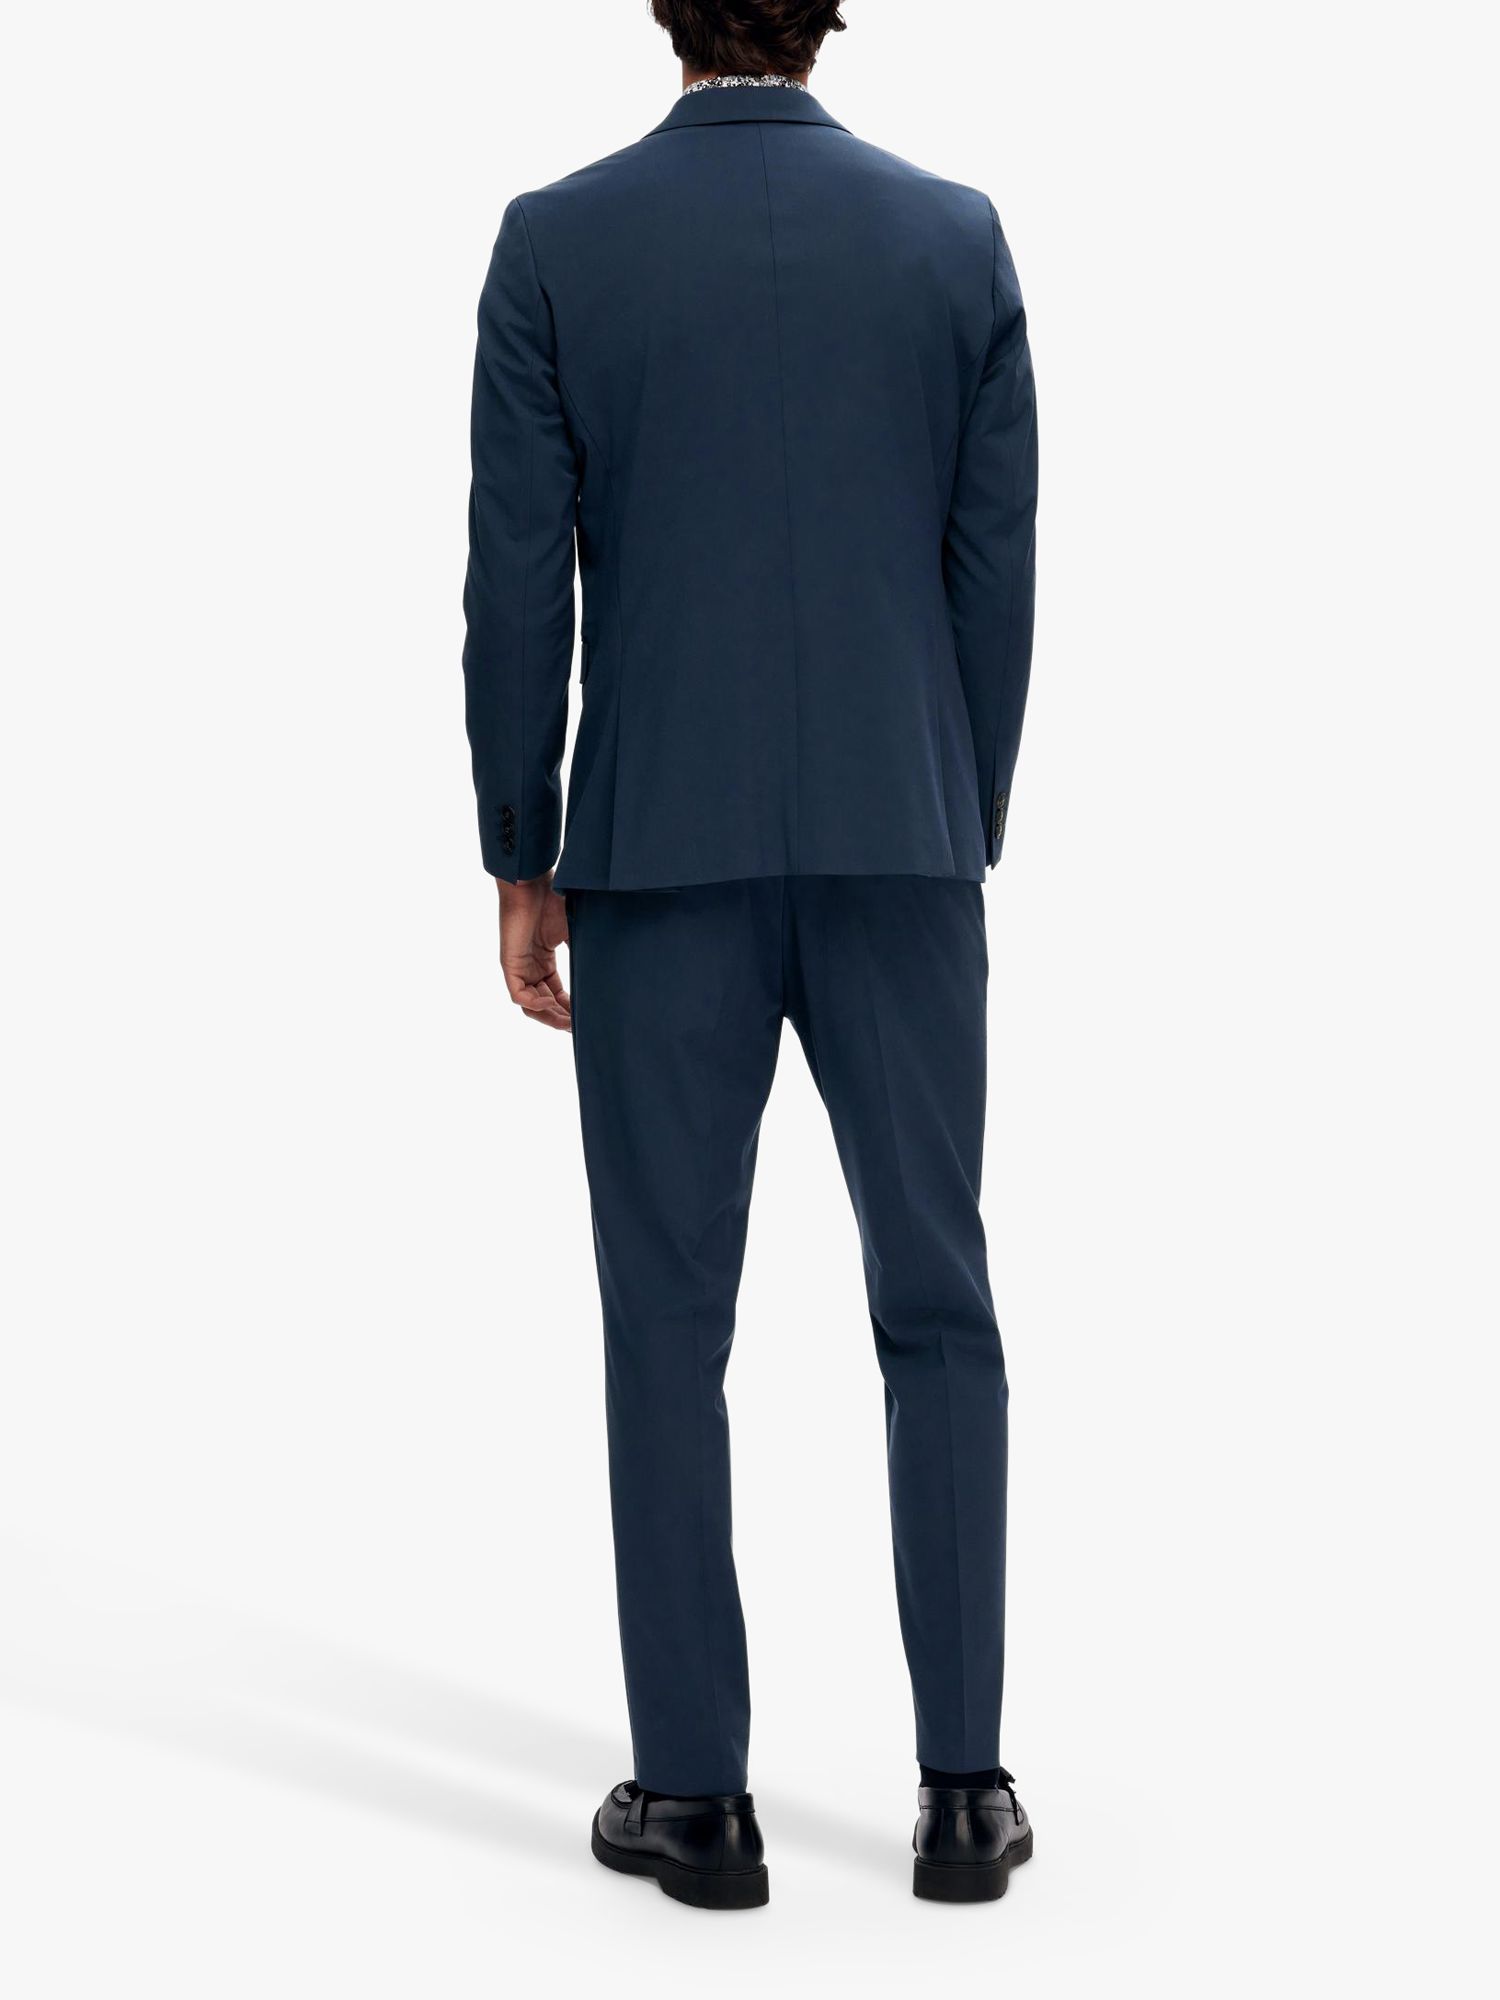 Buy SELECTED HOMME Liam Suit Blazer, Navy Online at johnlewis.com